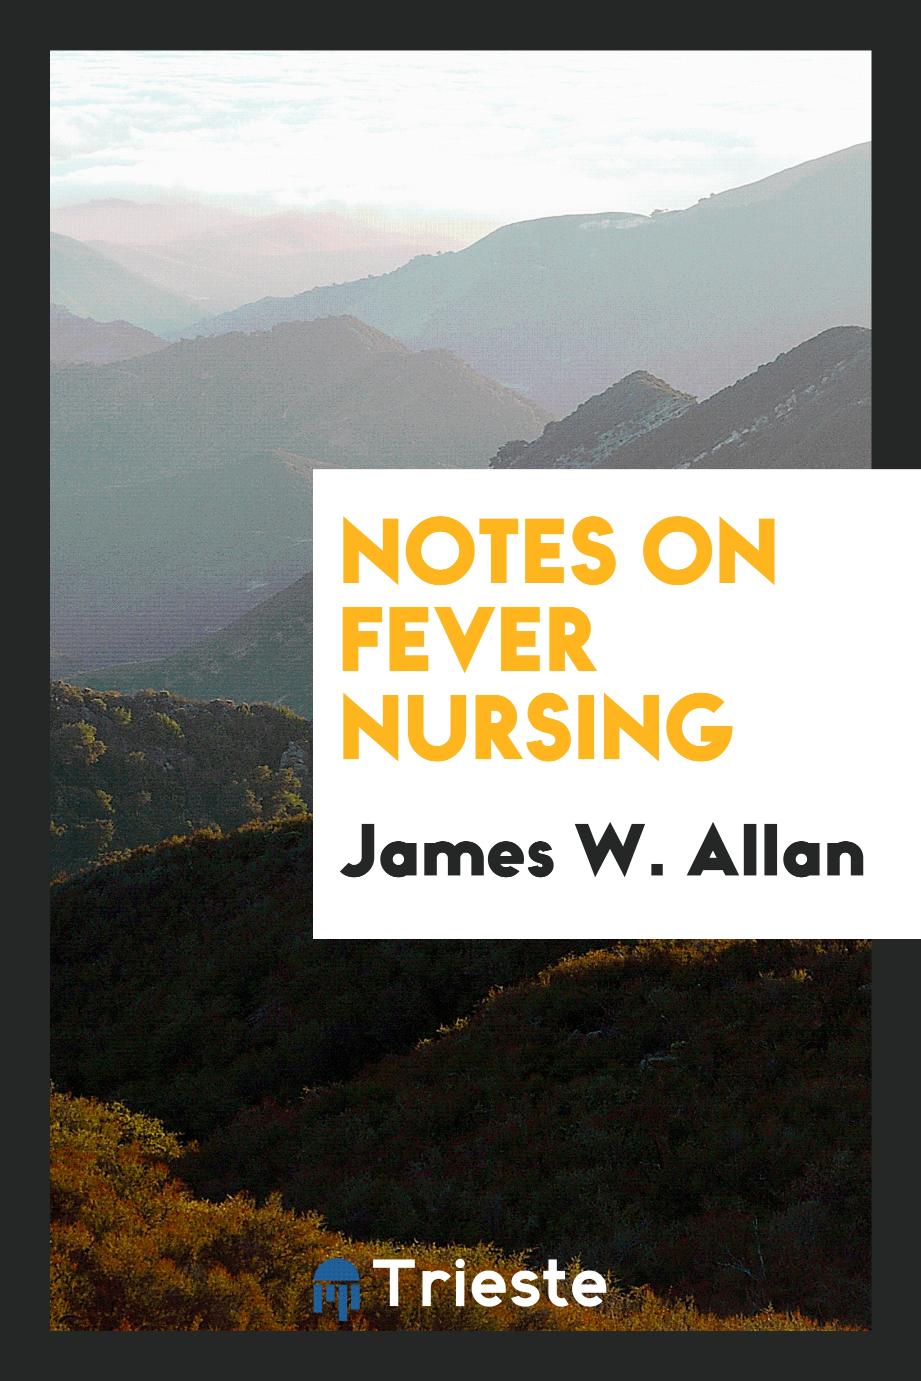 Notes on fever nursing